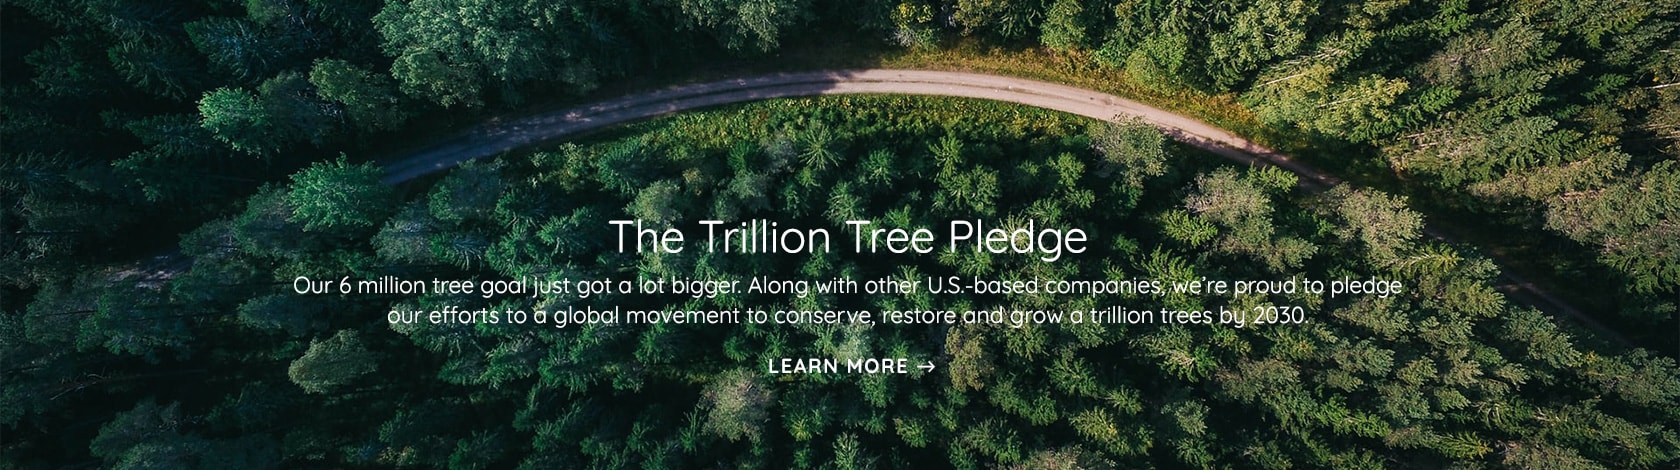 The Trillion Tree Pledge